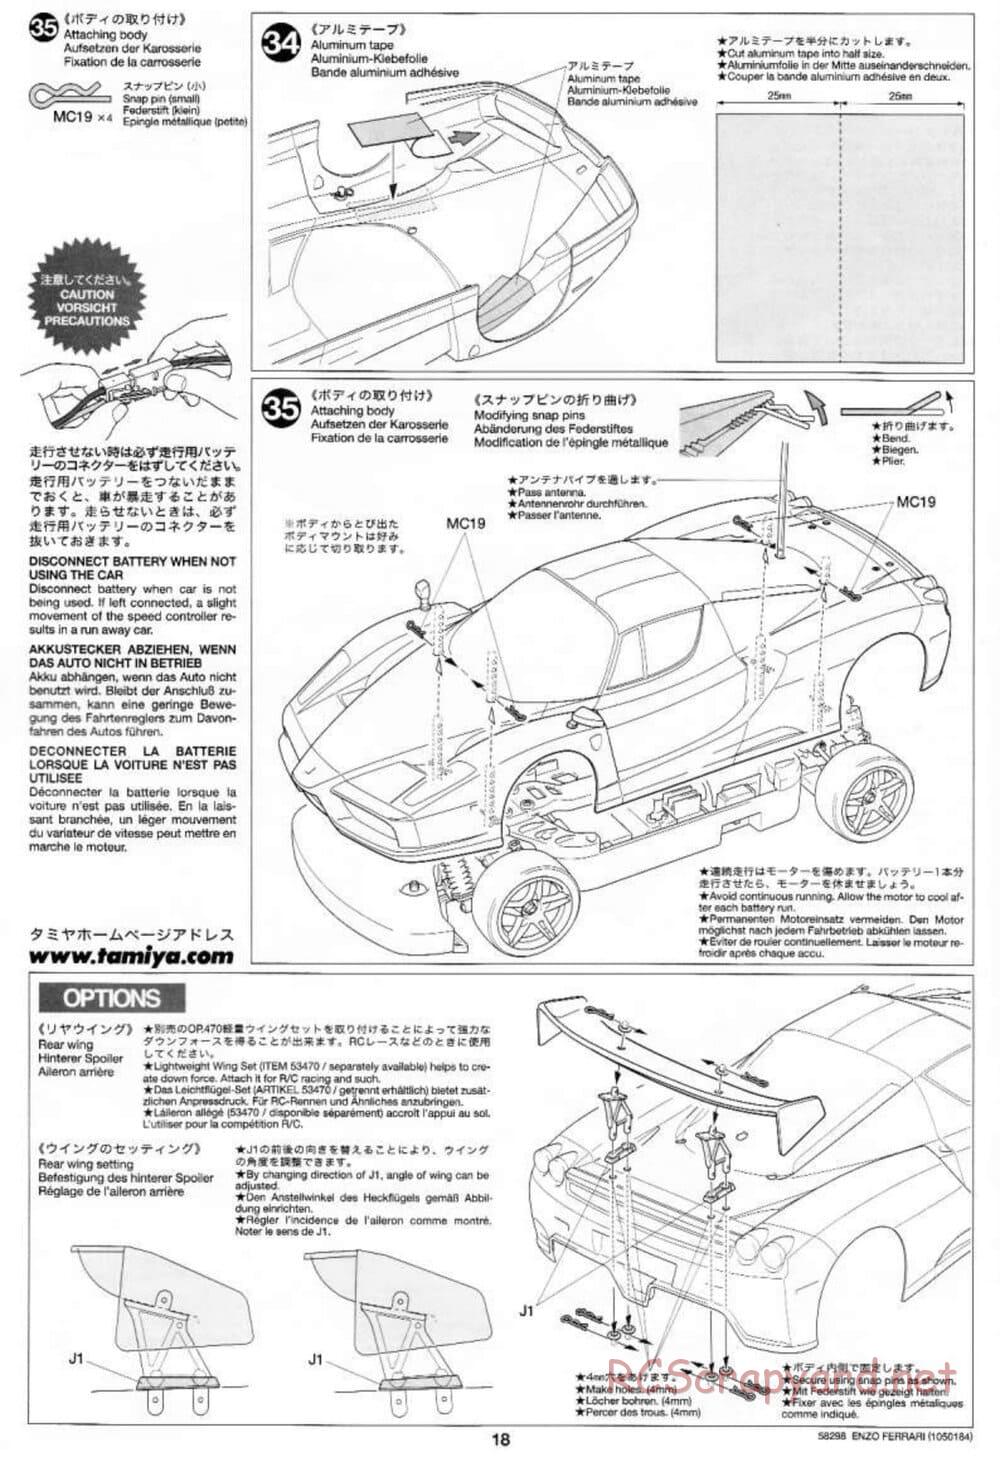 Tamiya - Enzo Ferrari - TB-01 Chassis - Manual - Page 18